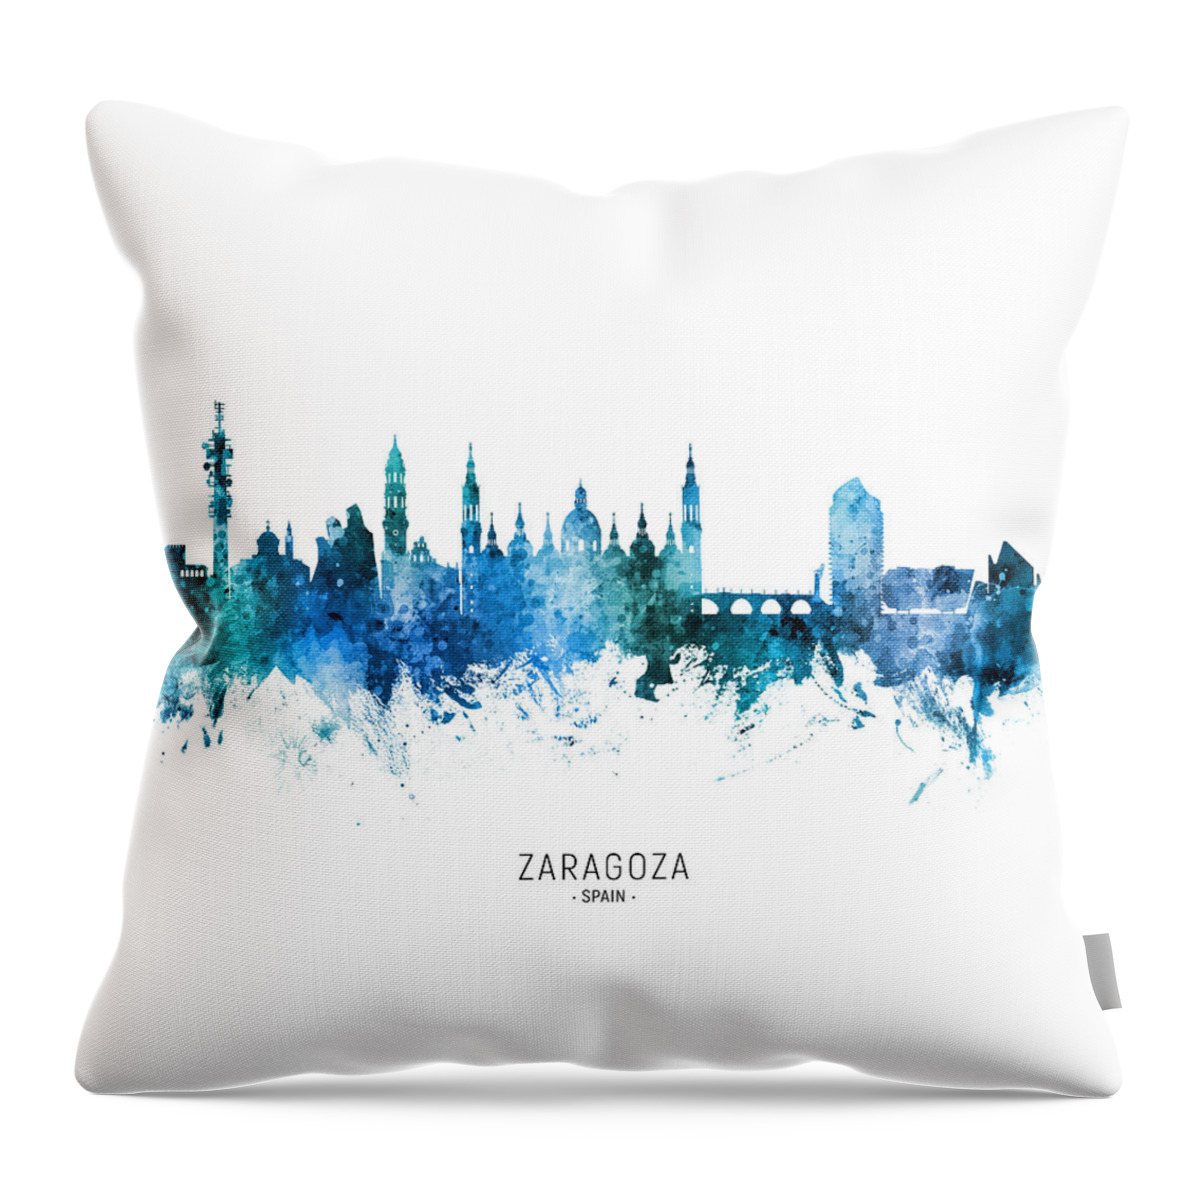 Zaragoza Throw Pillow featuring the digital art Zaragoza Spain Skyline by Michael Tompsett